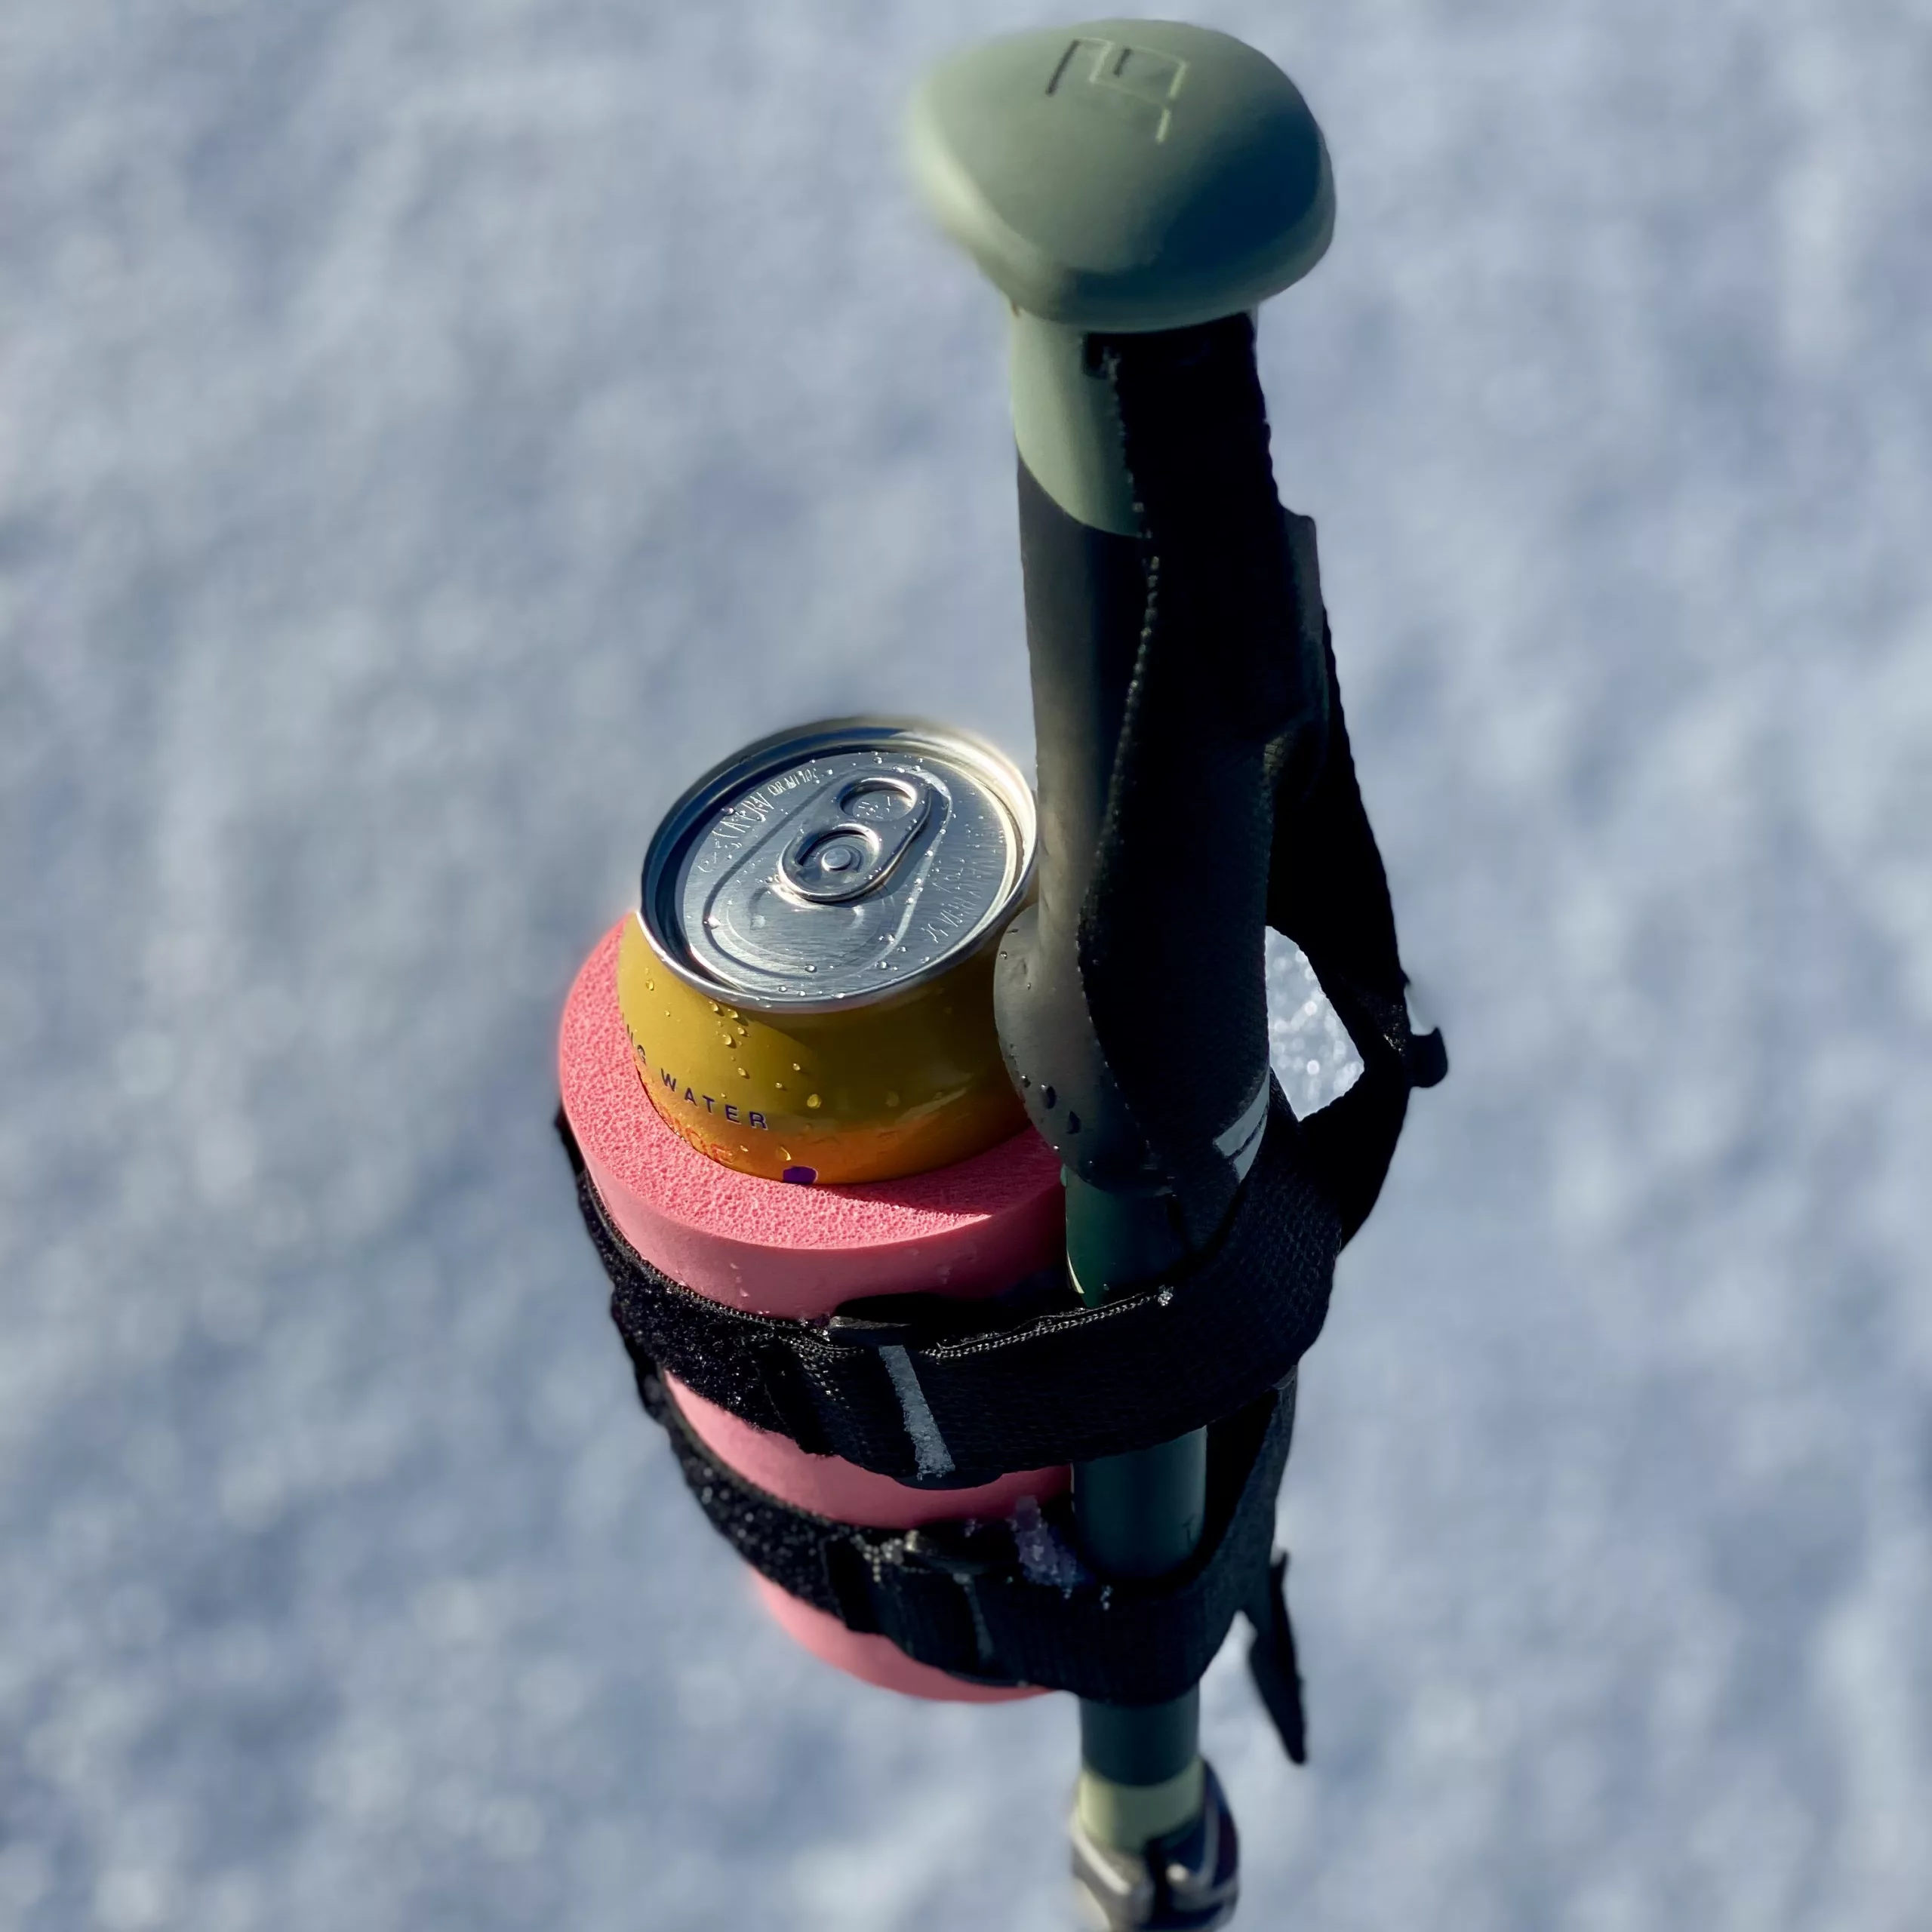 Leather Ski Pole Beer Holder - Beer Binding